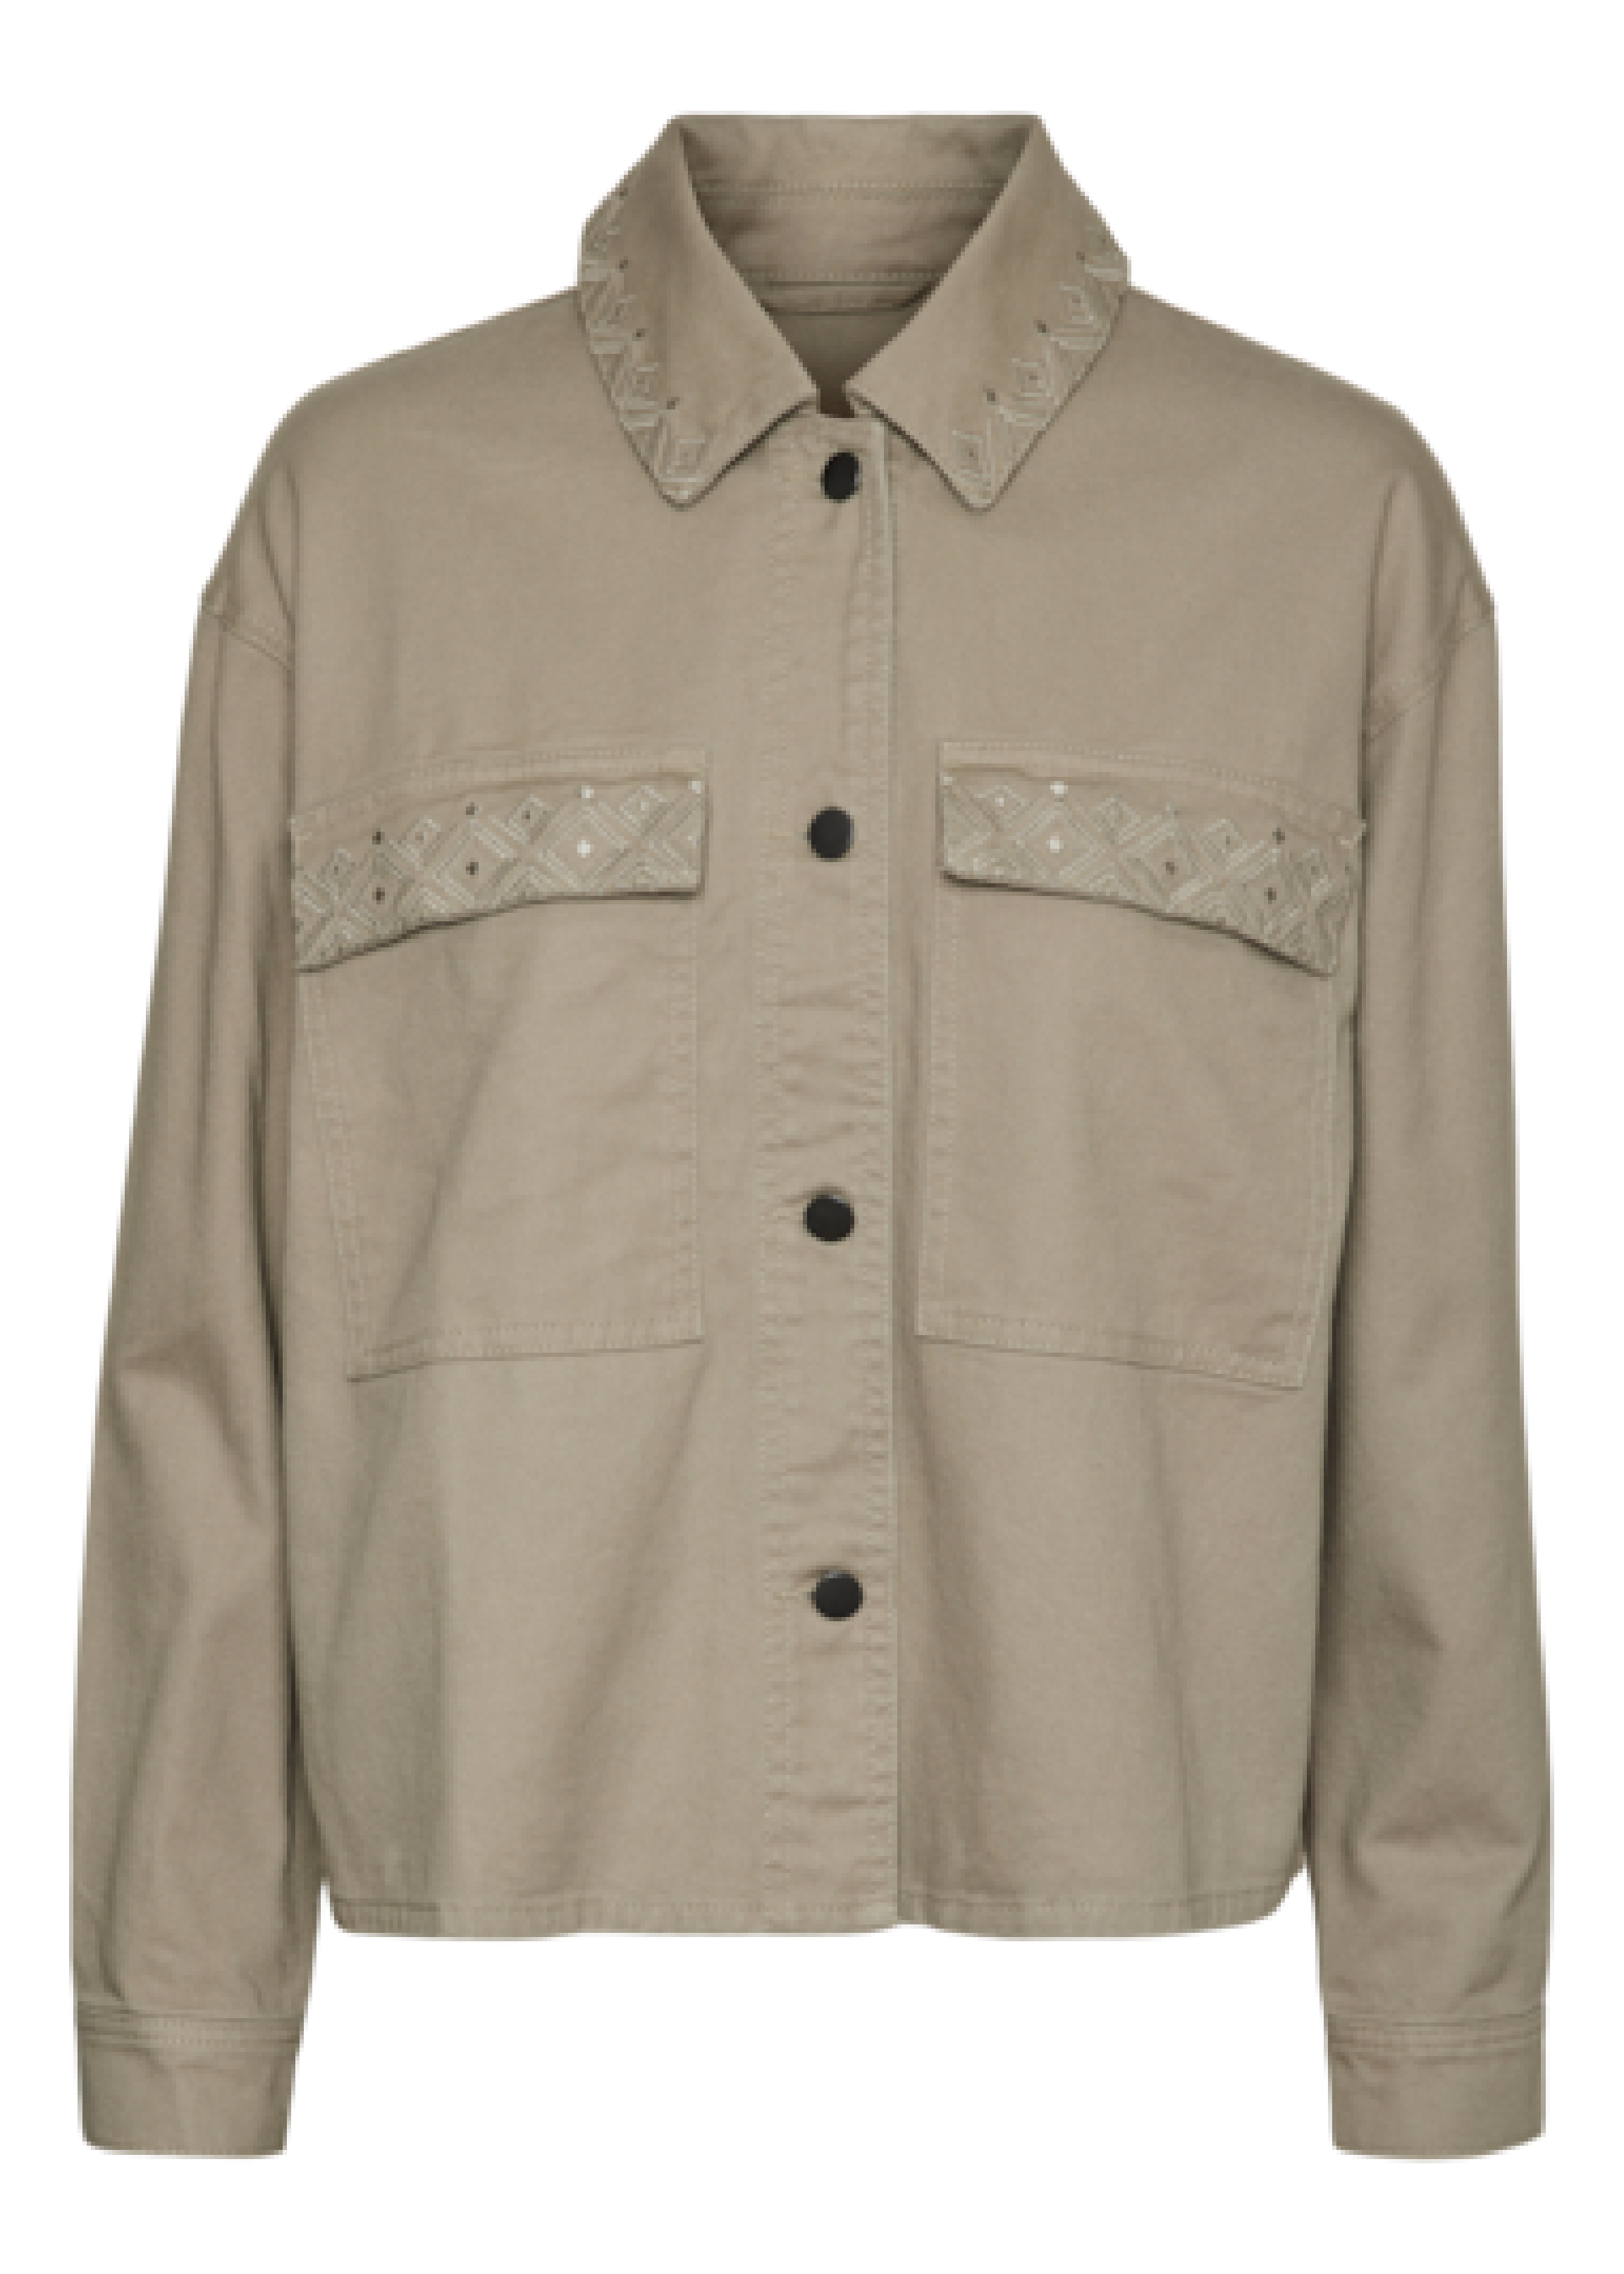 Kenya Laurel Oak Embroidery Denim Jacket